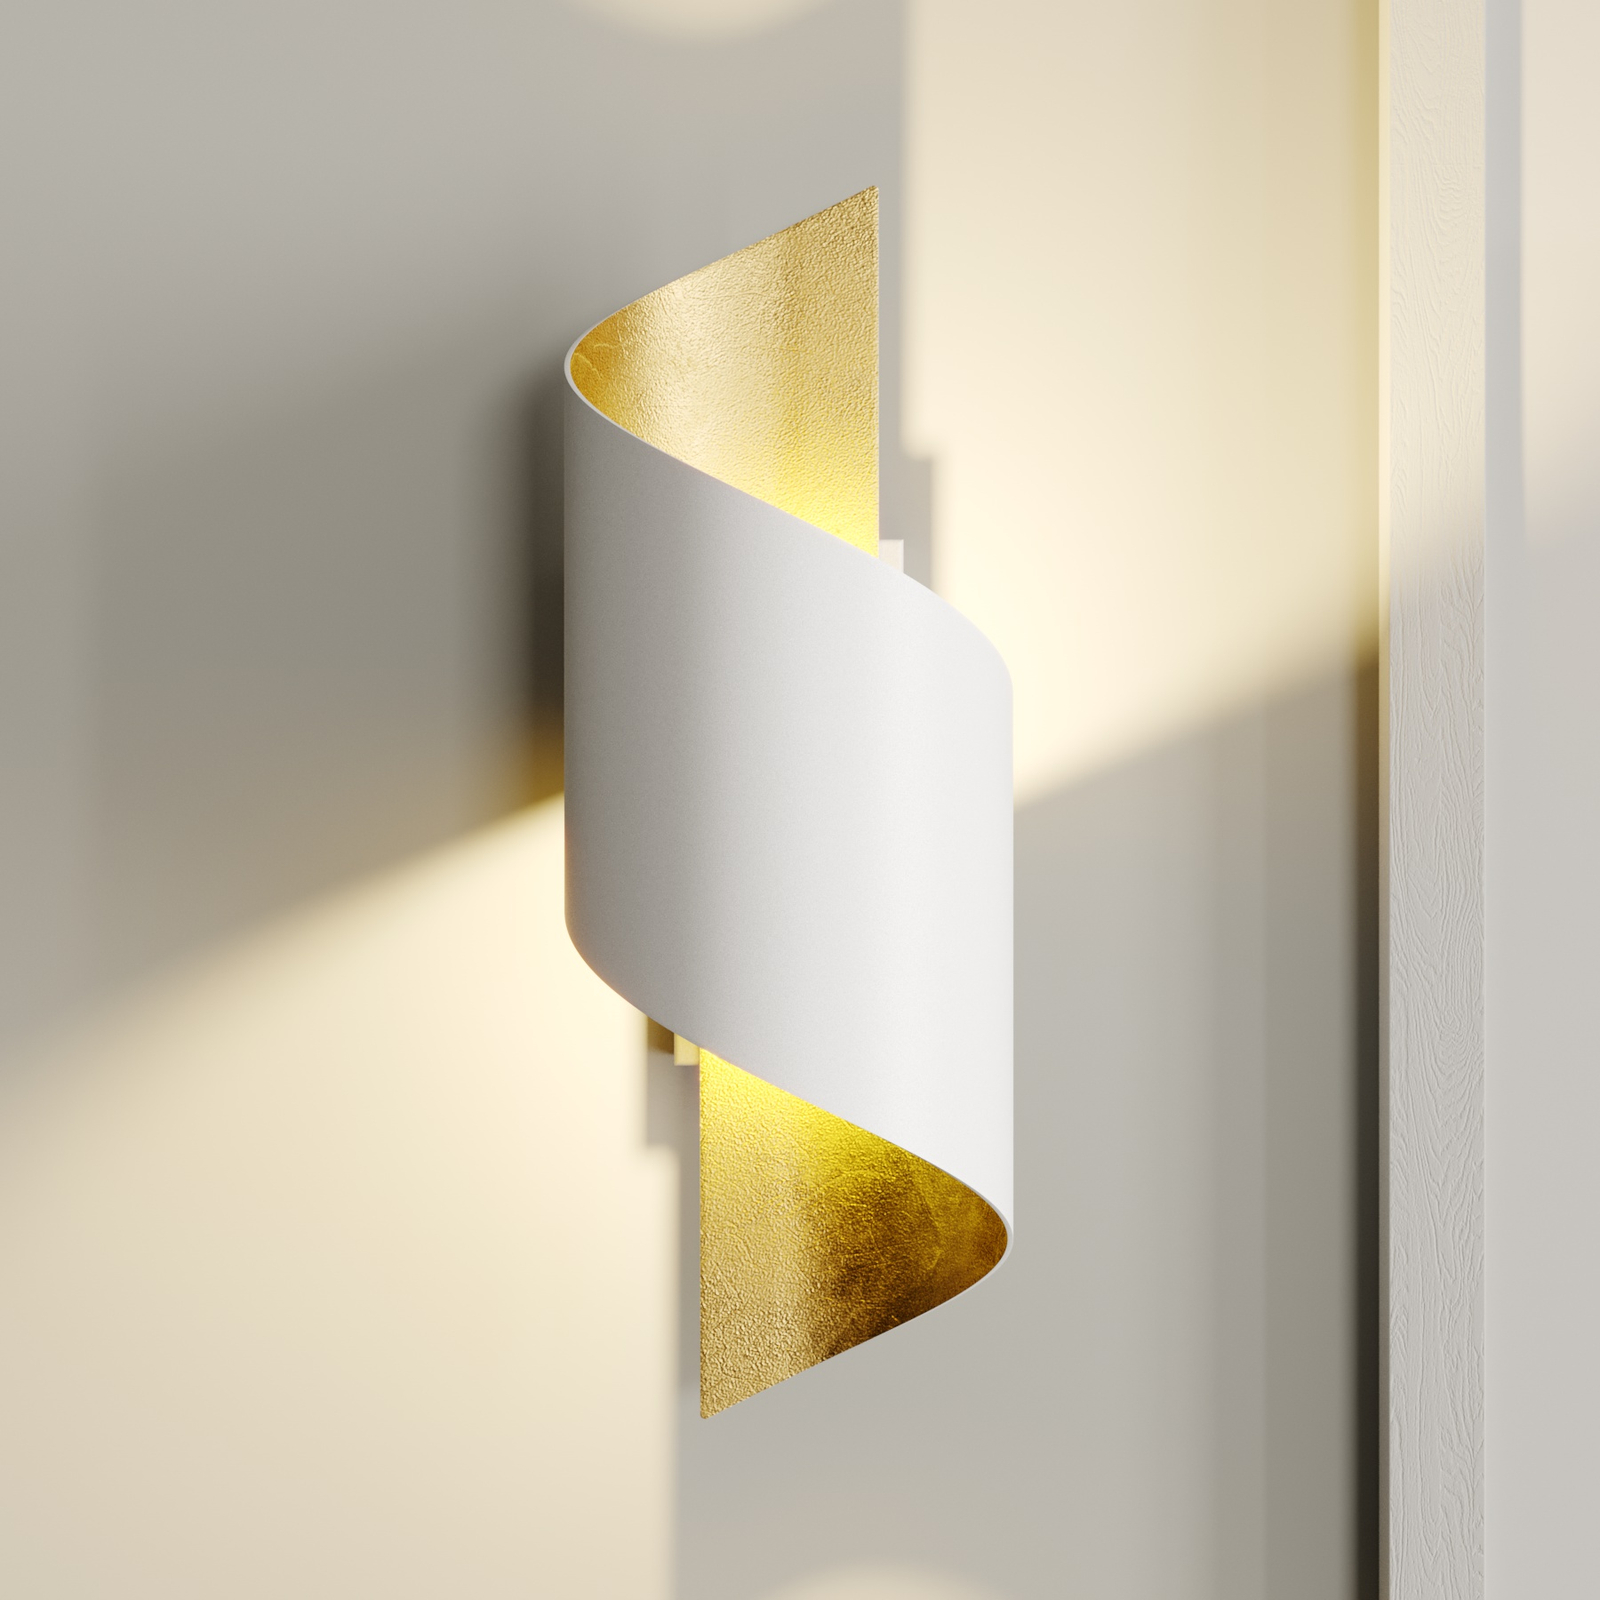 Desirio metal wall light, white and gold